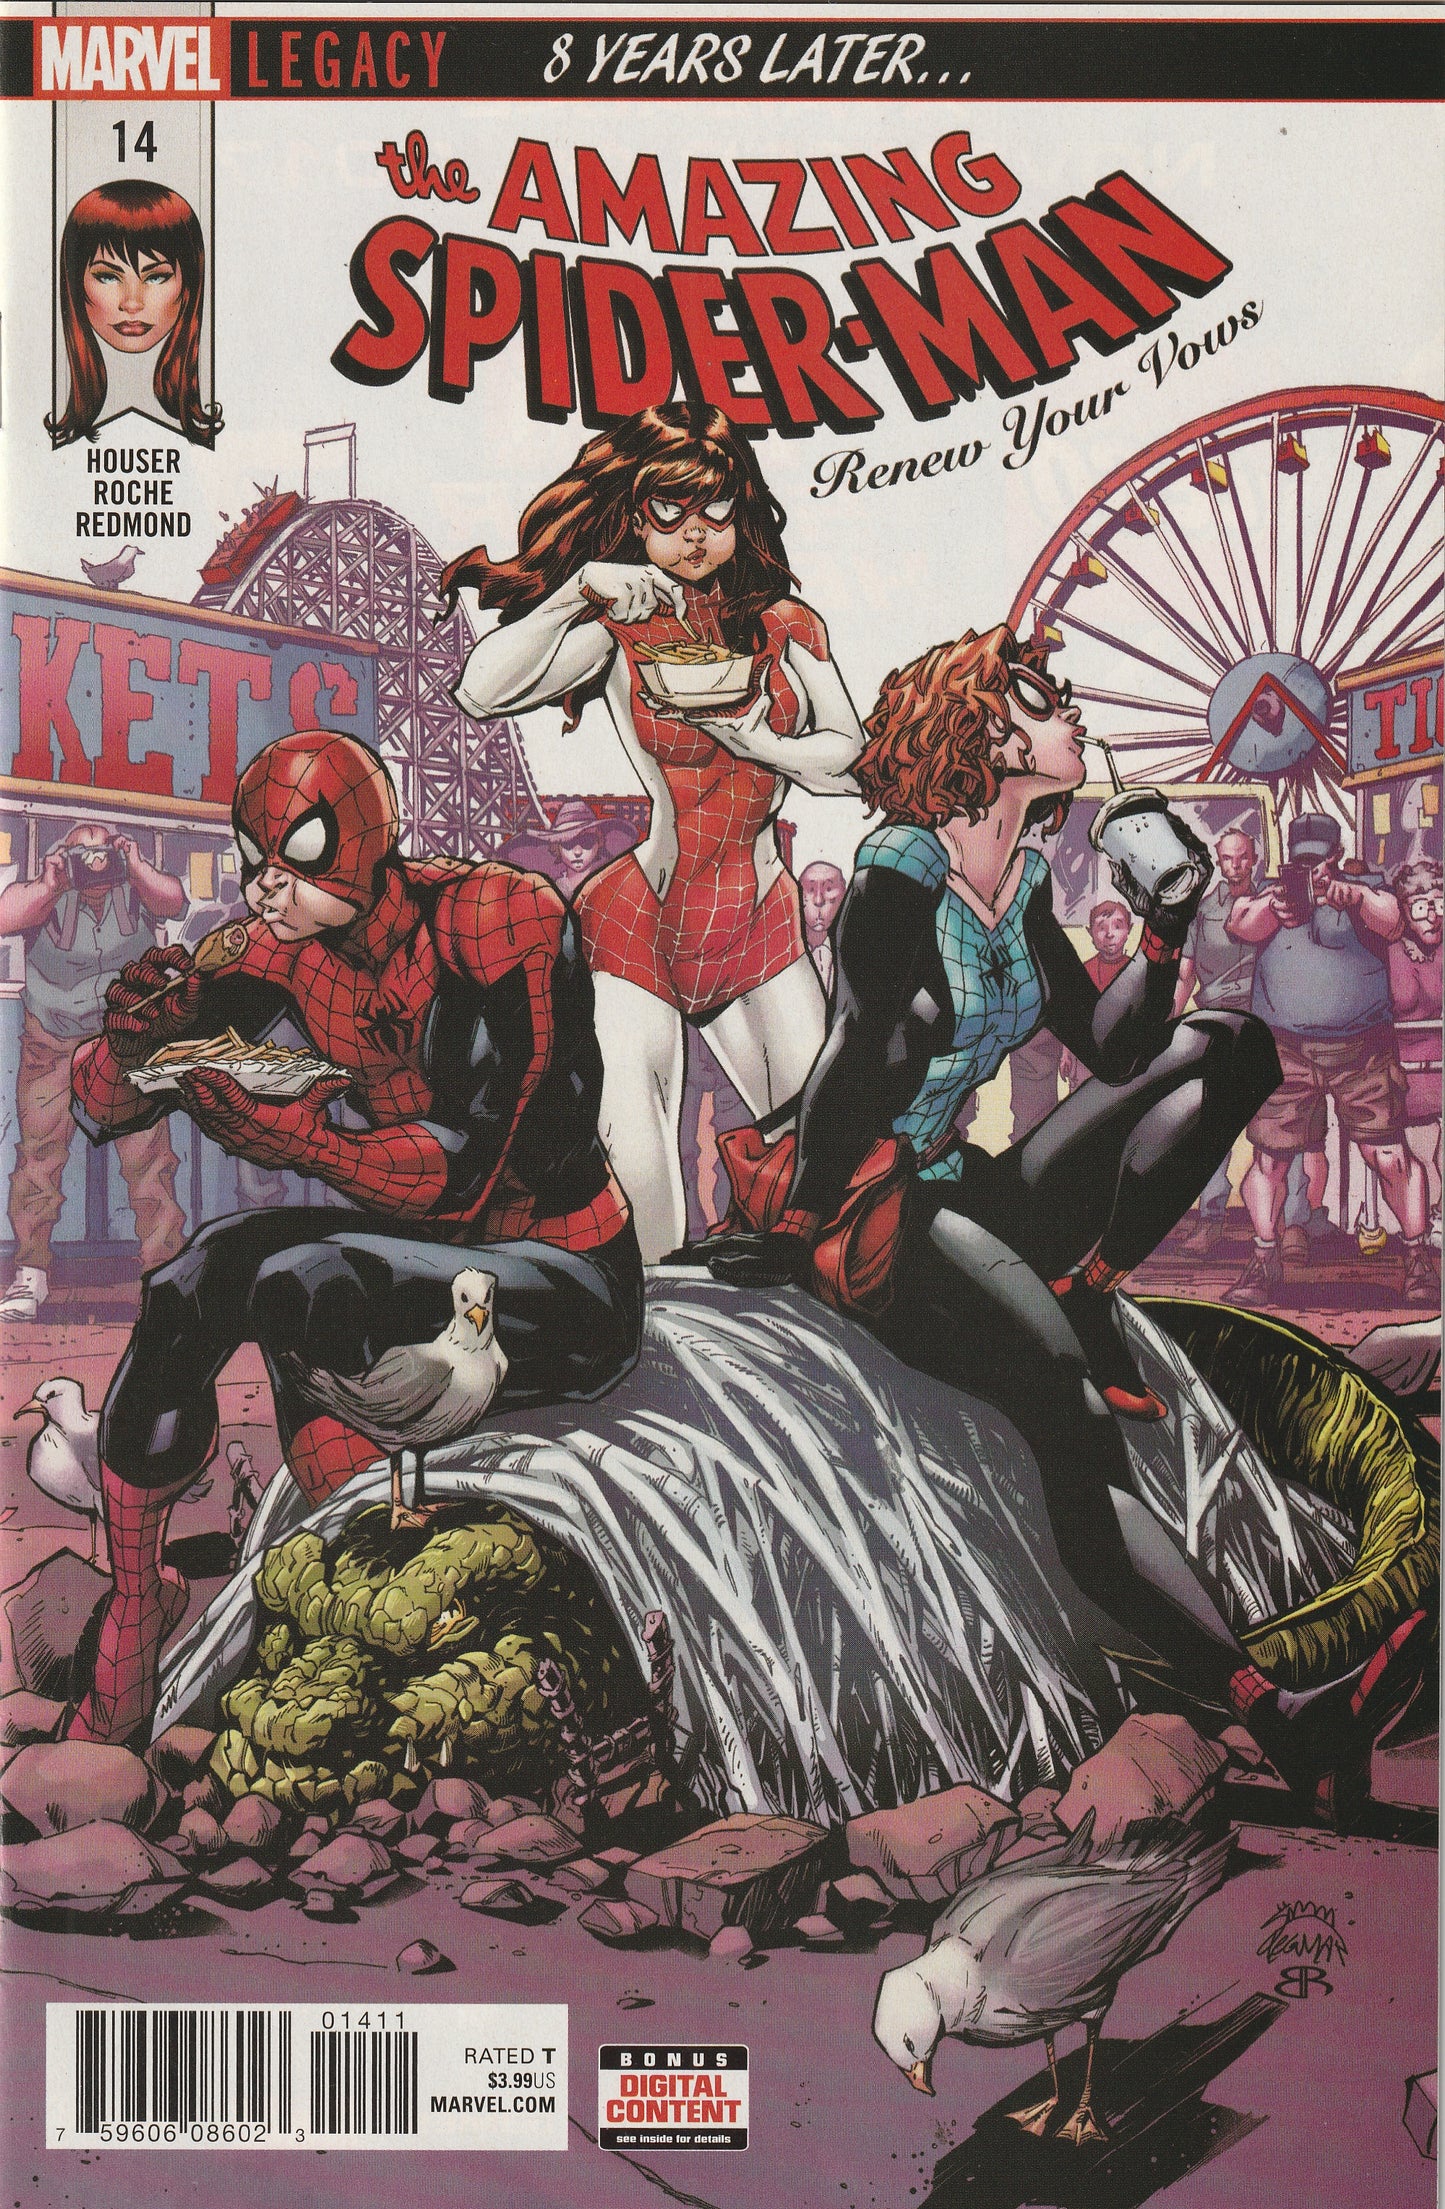 Amazing Spider-Man: Renew Your Vows #14 - Vol 2 (2018)